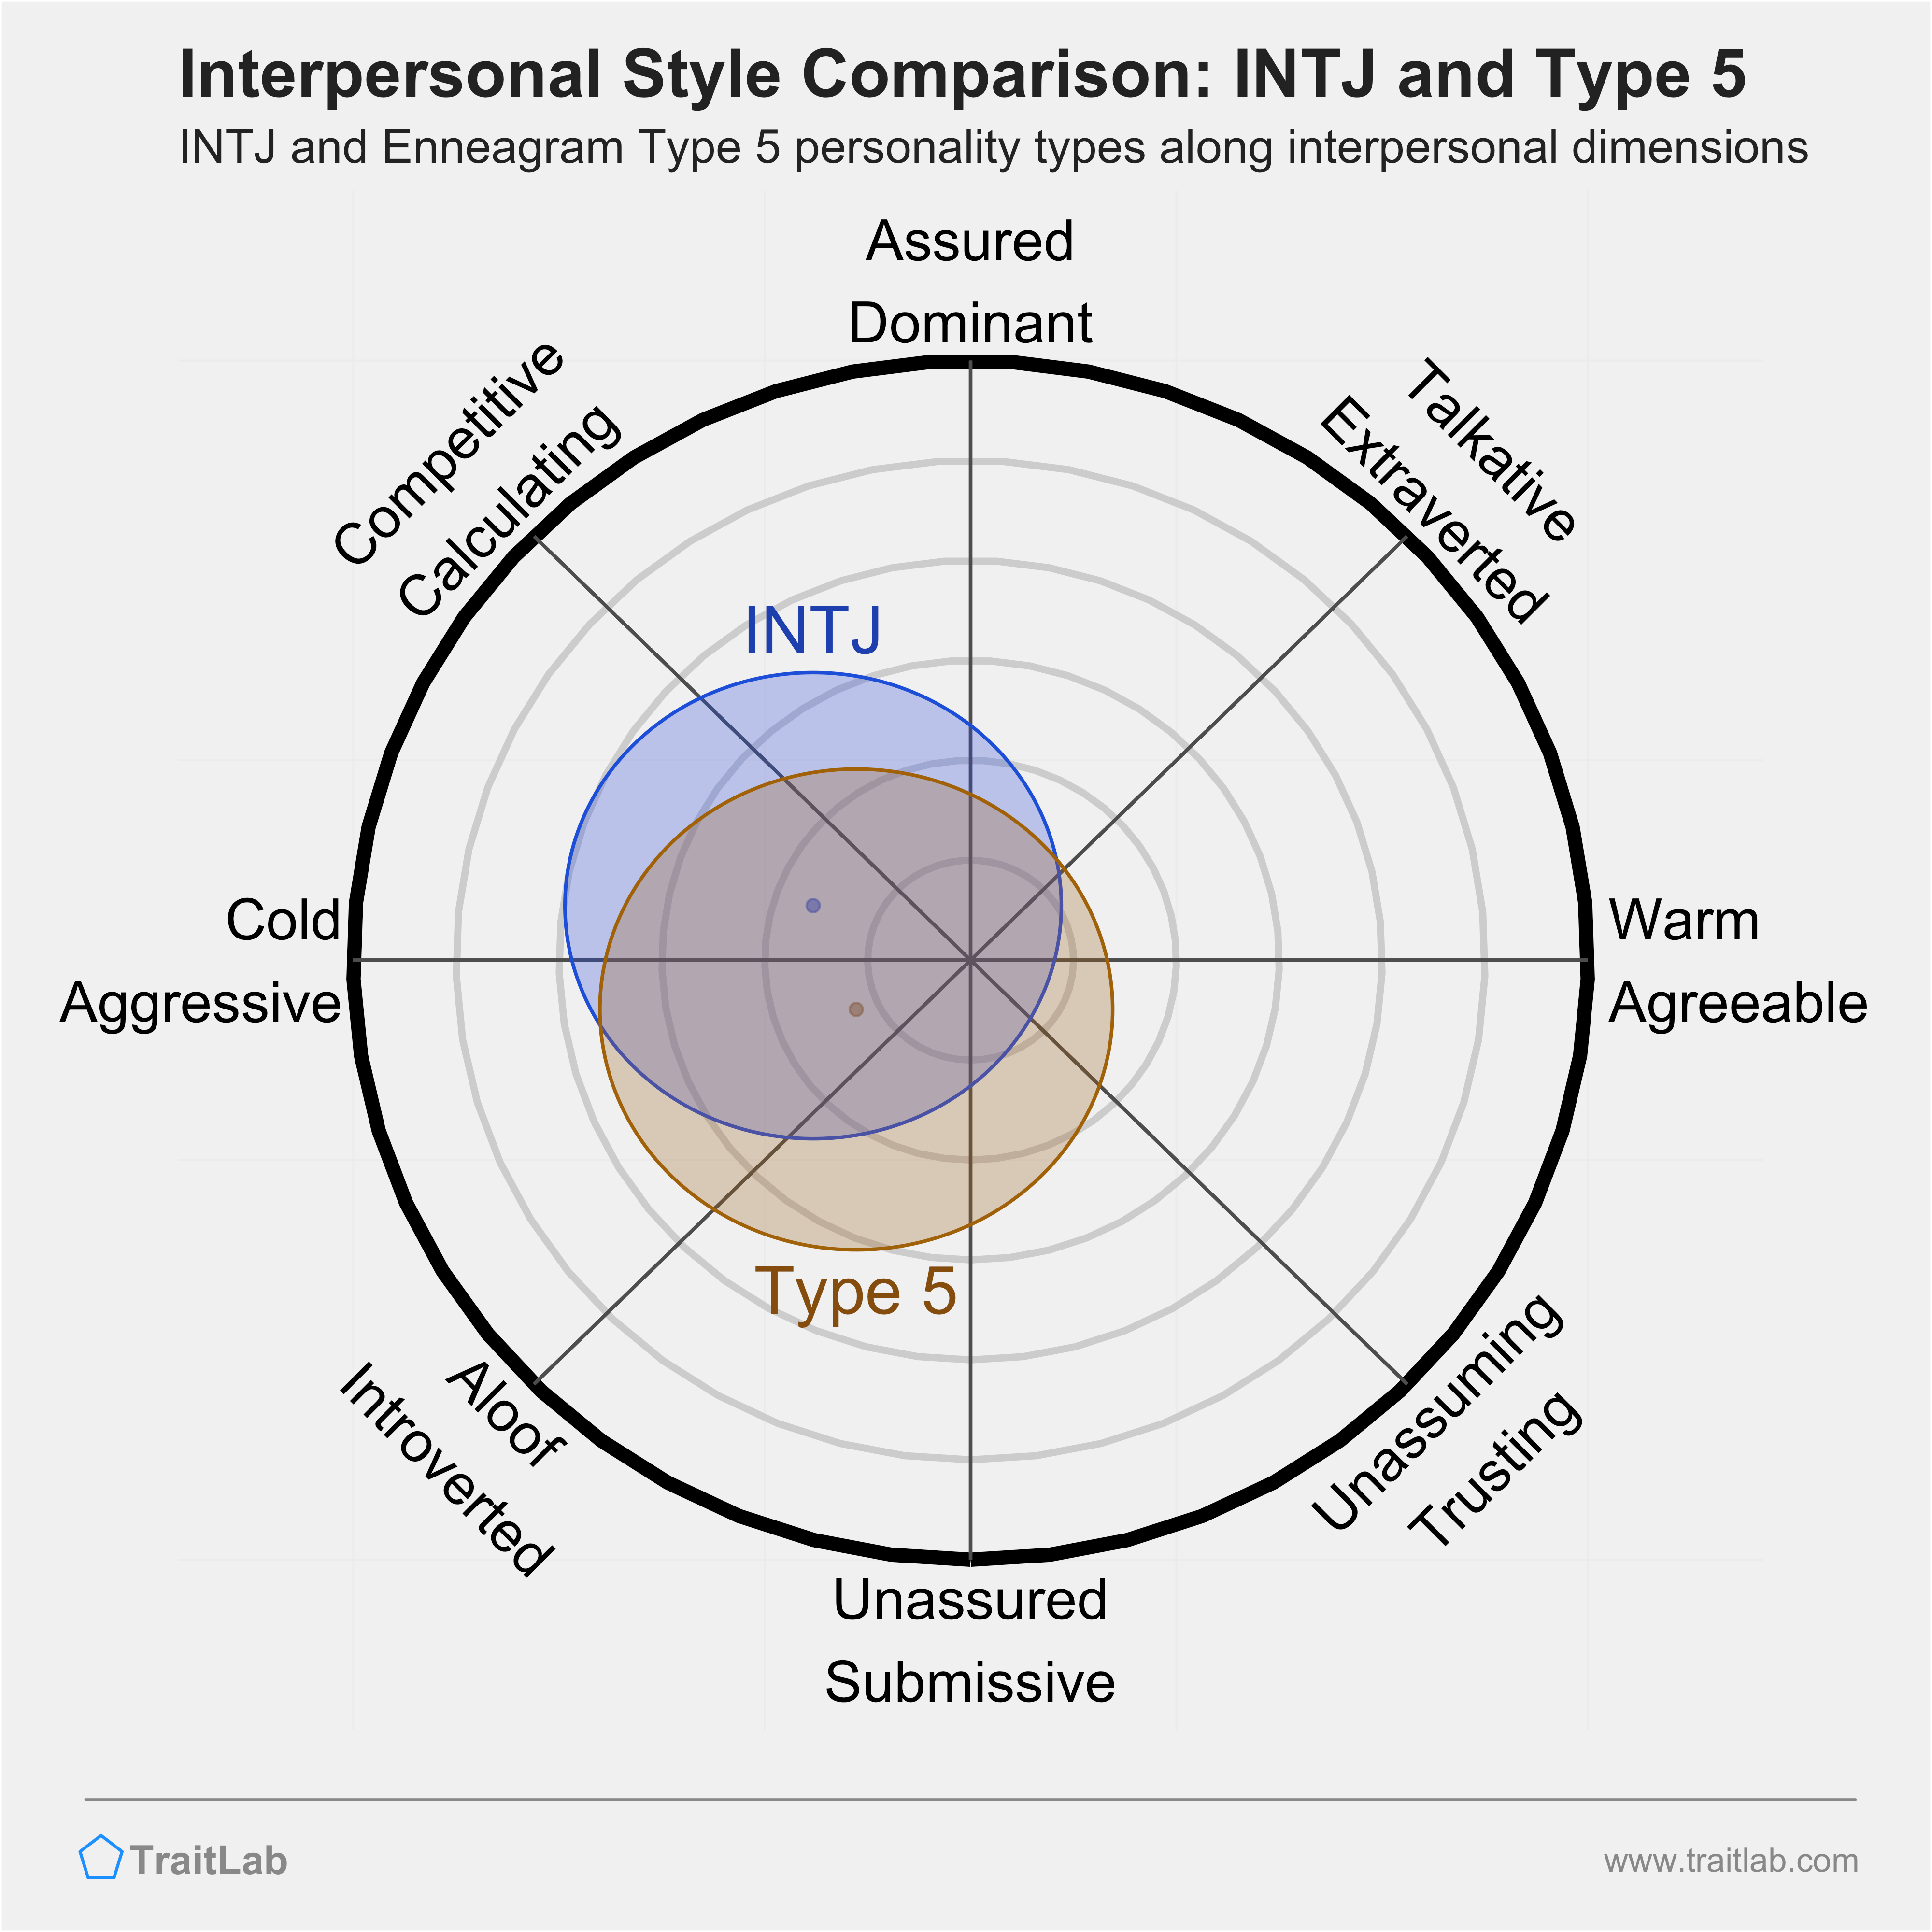 Enneagram INTJ and Type 5 comparison across interpersonal dimensions